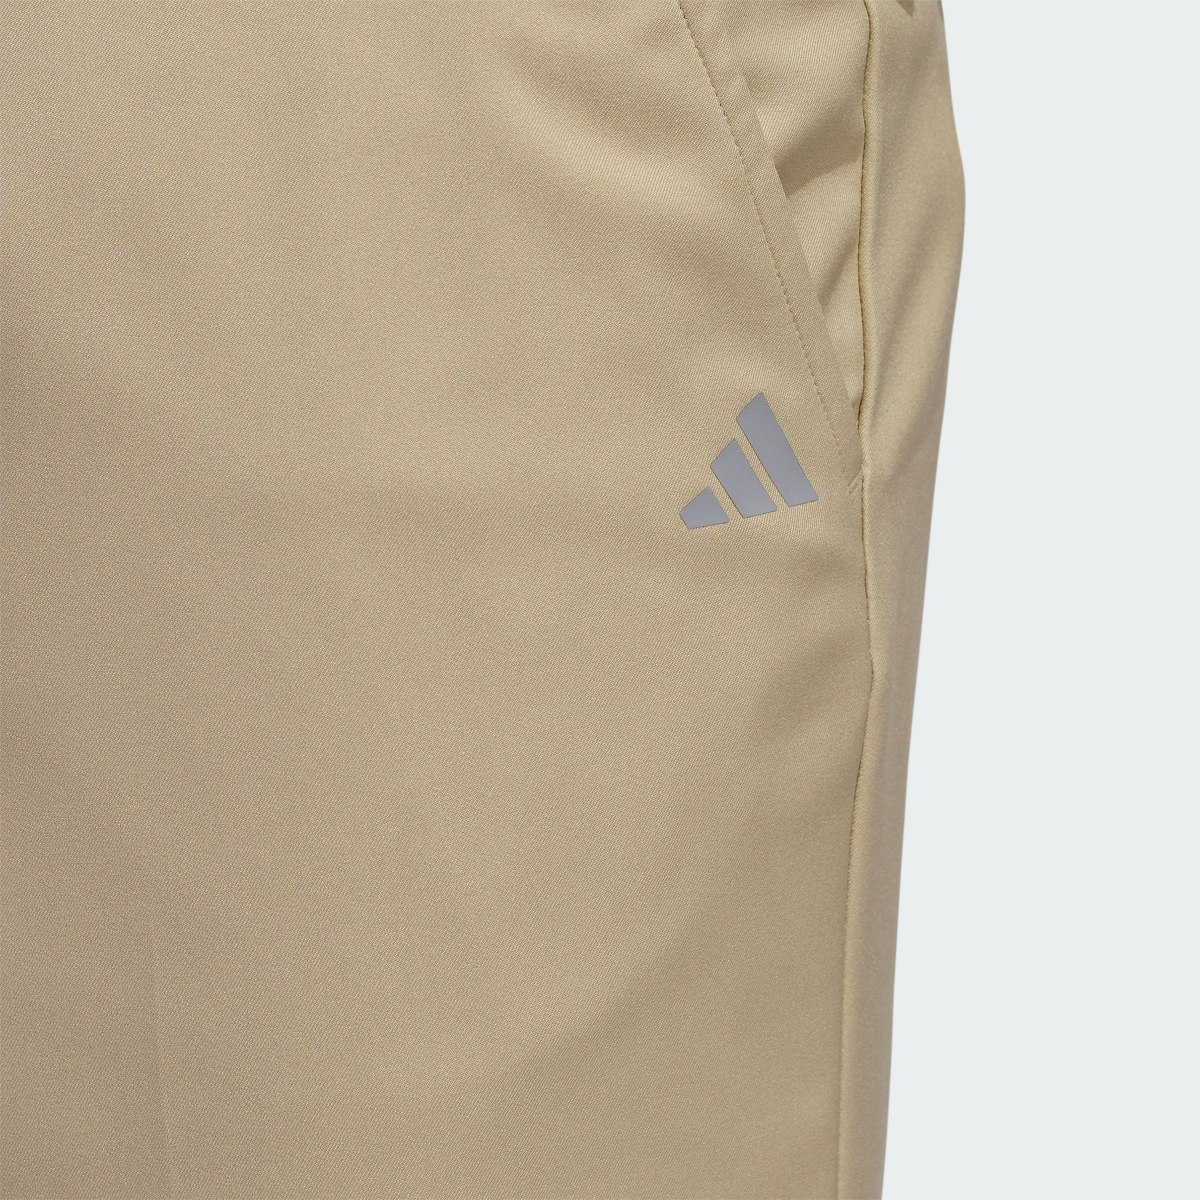 Adidas Adi Advantage Golf Shorts. 5